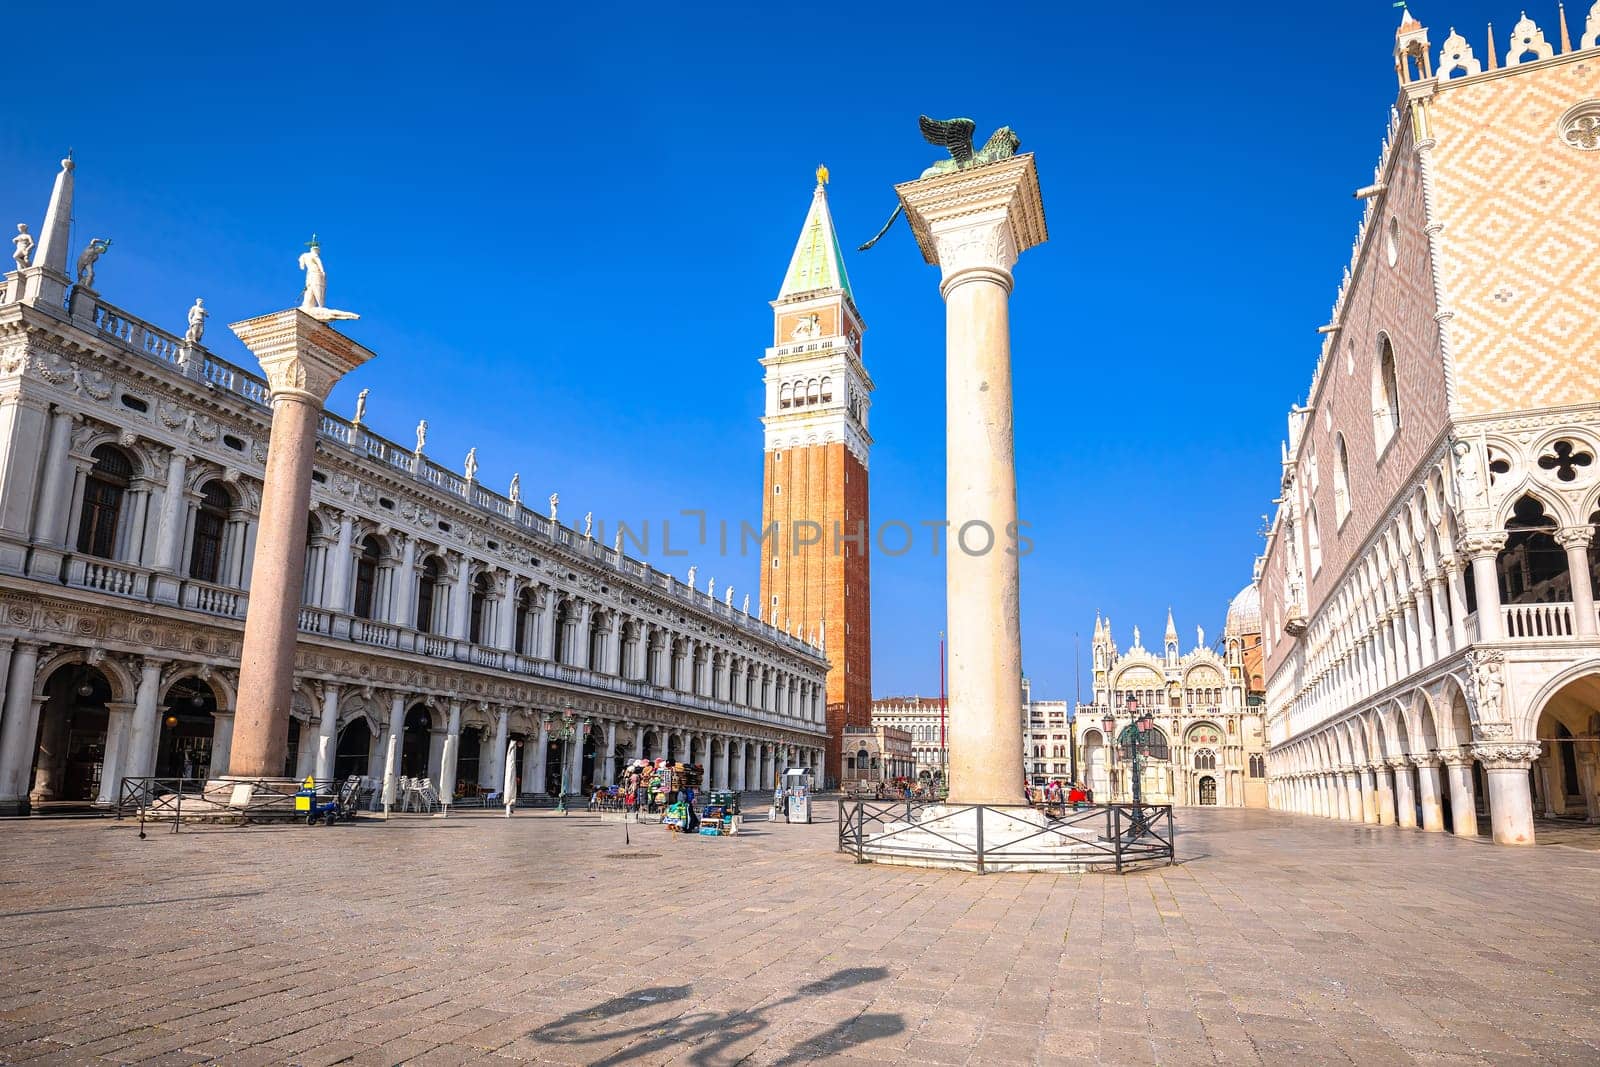 Piazza San Marco square in Venice scenic architecture view by xbrchx